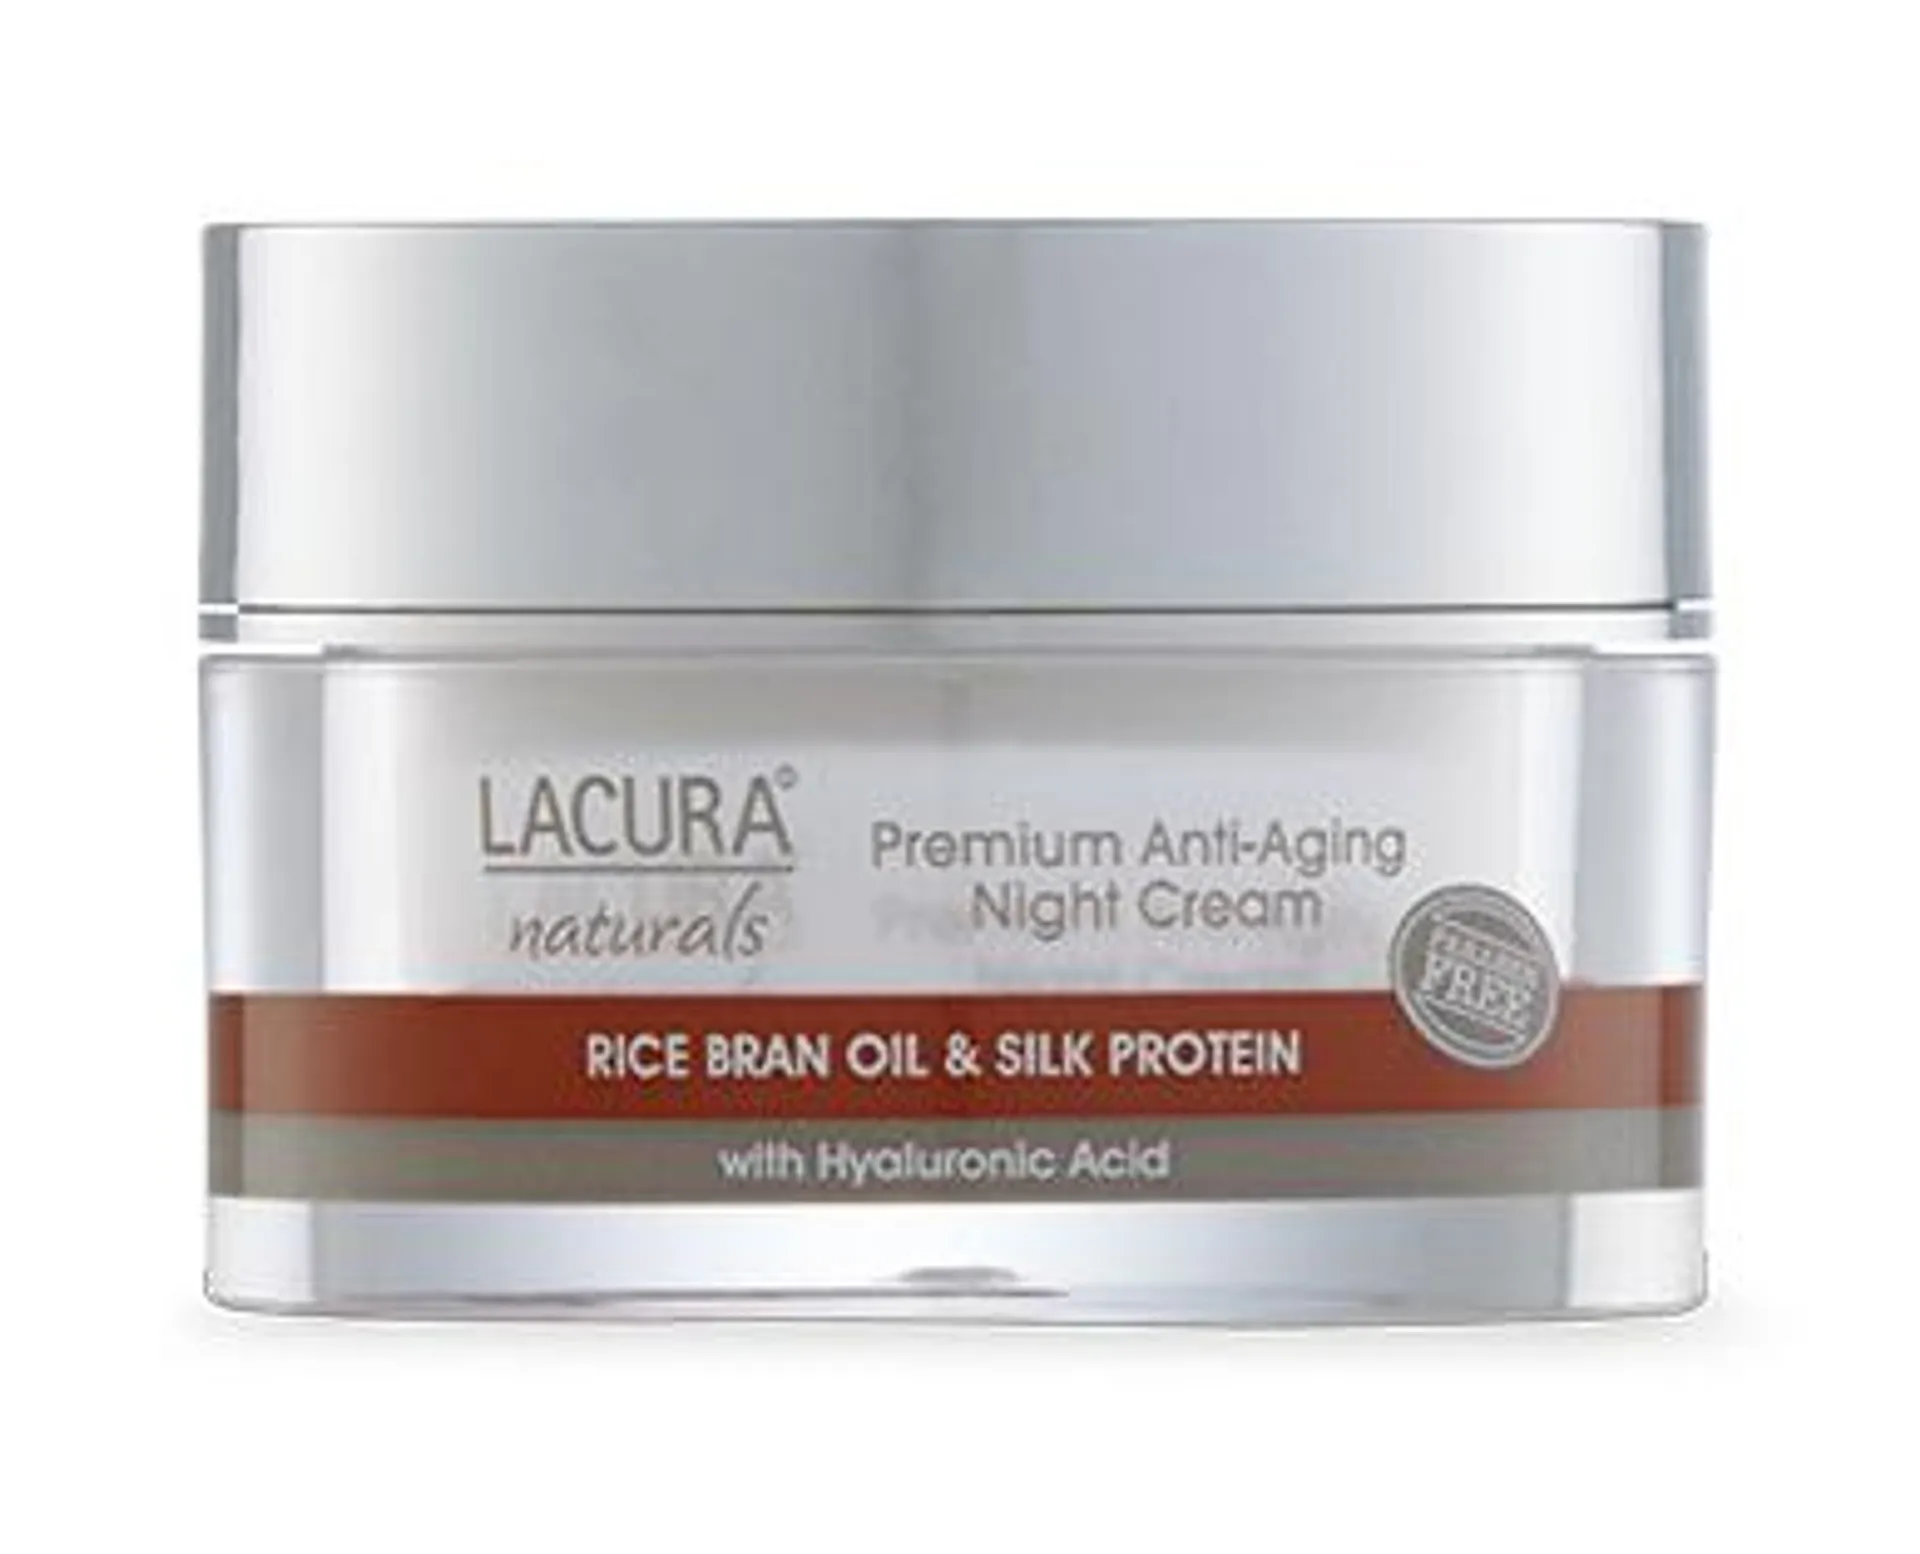 LACURA ® Naturals Anti-Aging Night Cream with Rice Bran Oil & Silk Protein 50ml